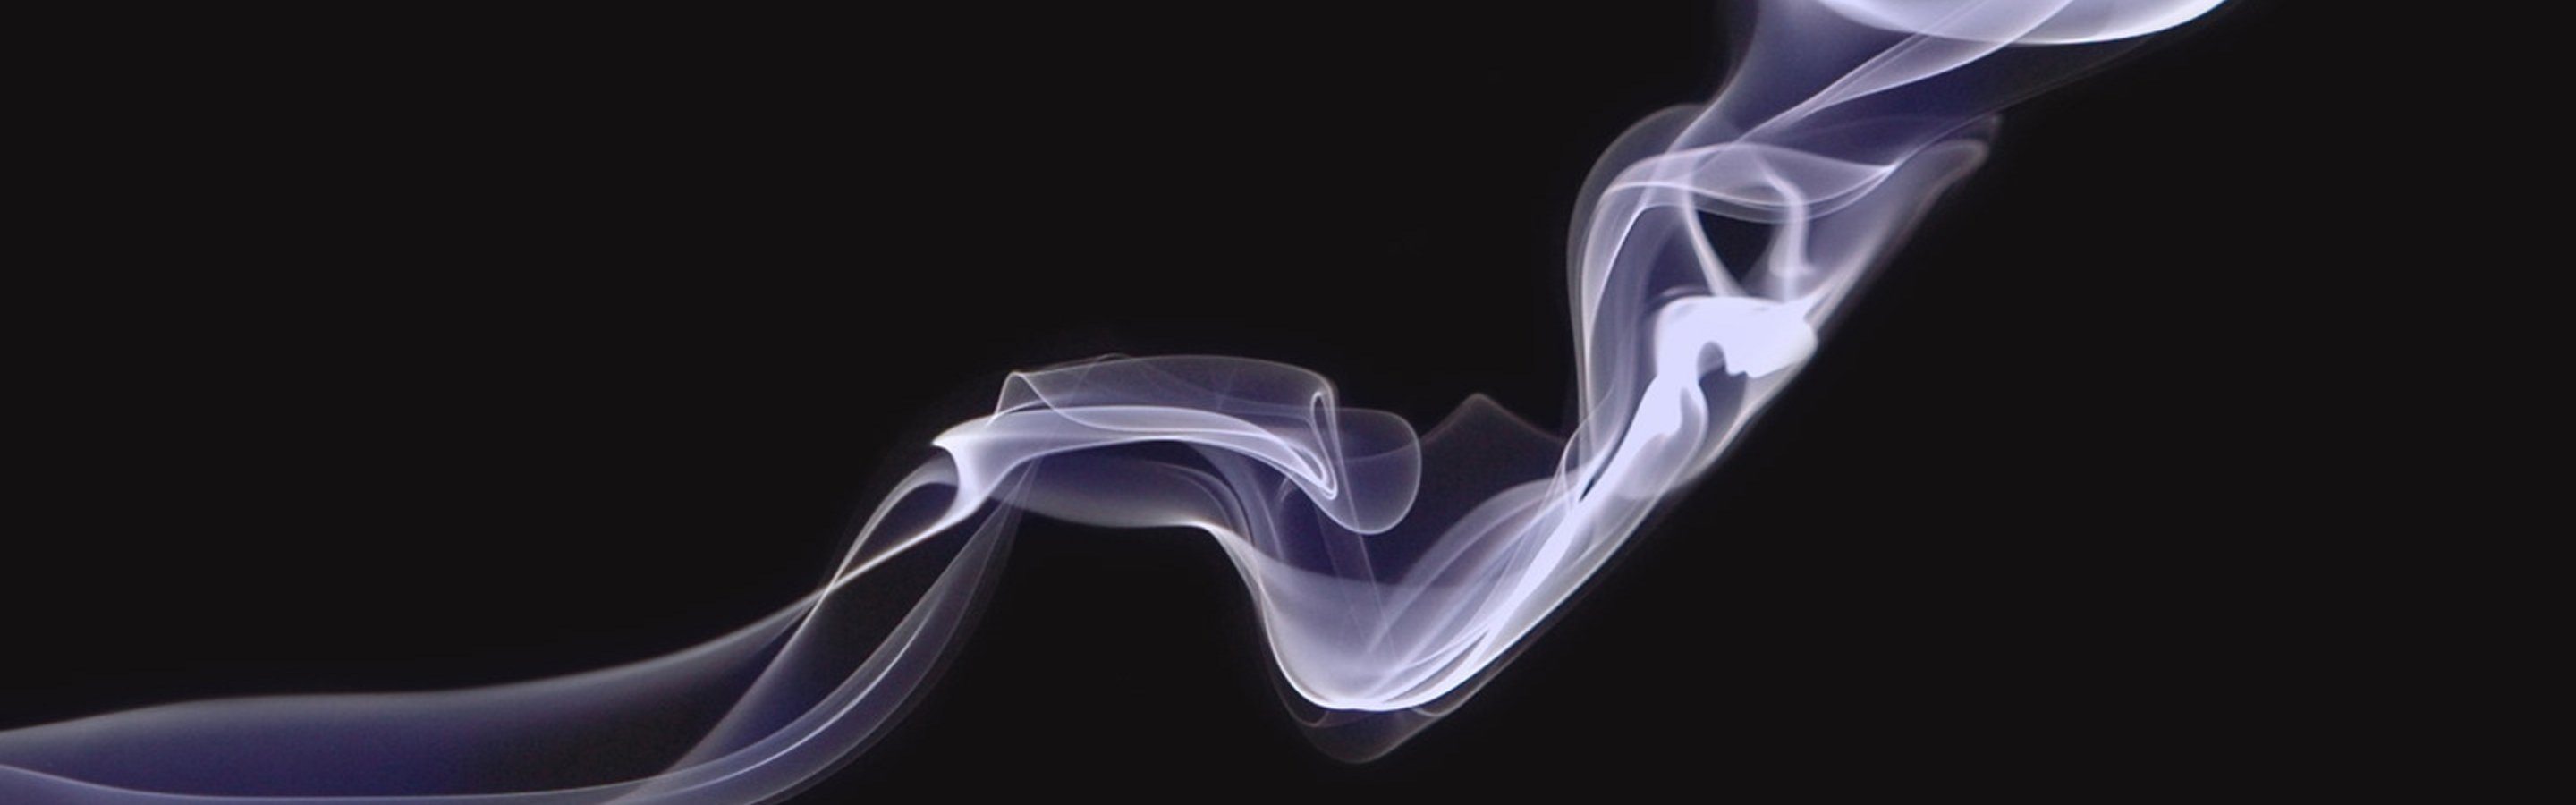 Smoke Wallpaper HD Formula